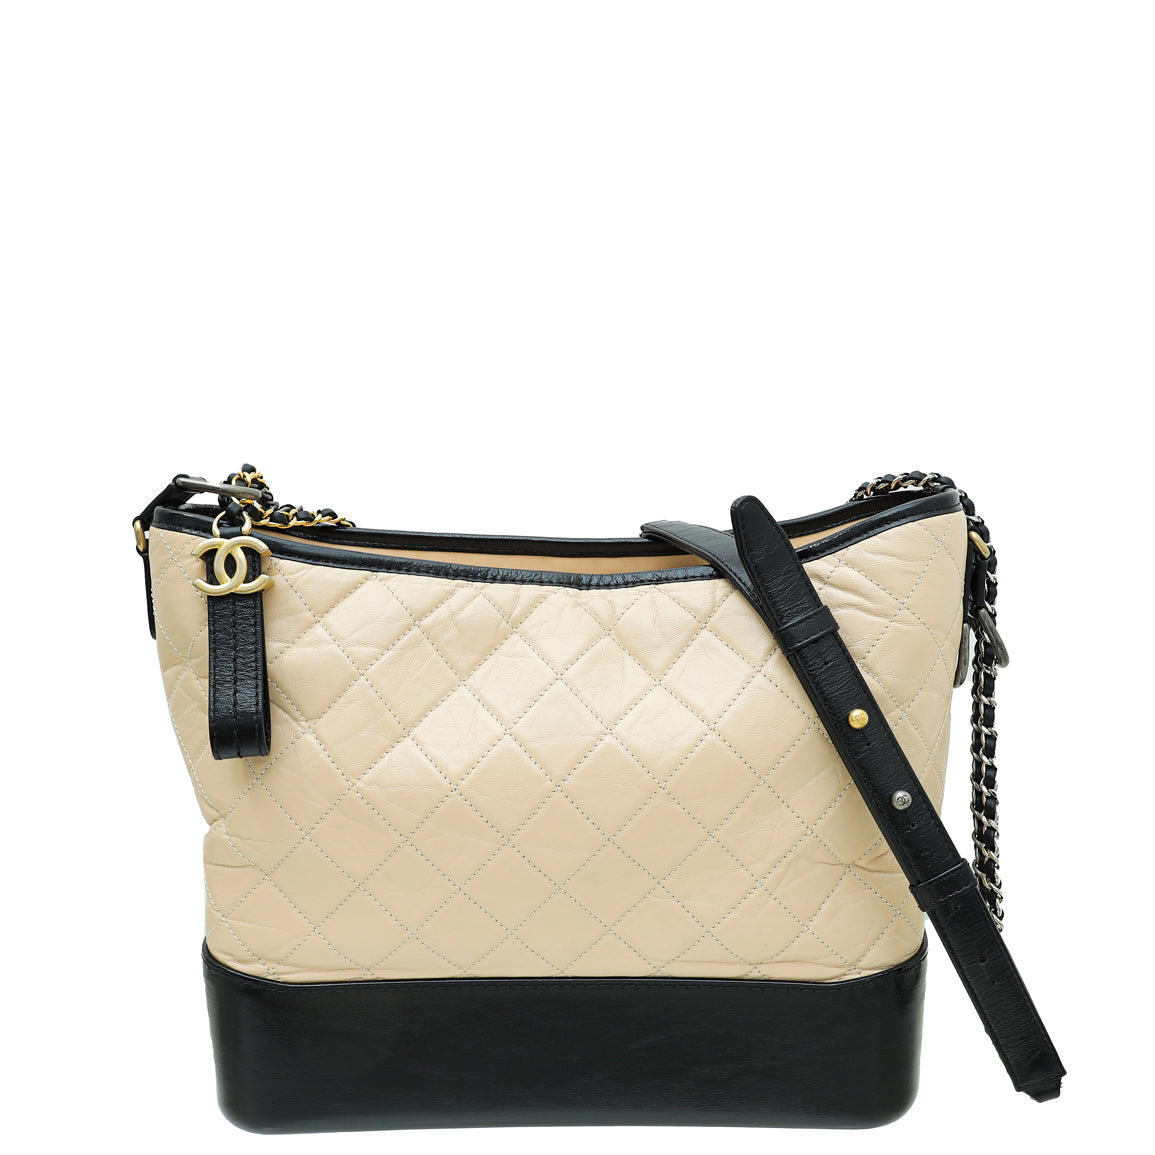 Chanel Bicolor CC Gabrielle Medium Hobo Bag